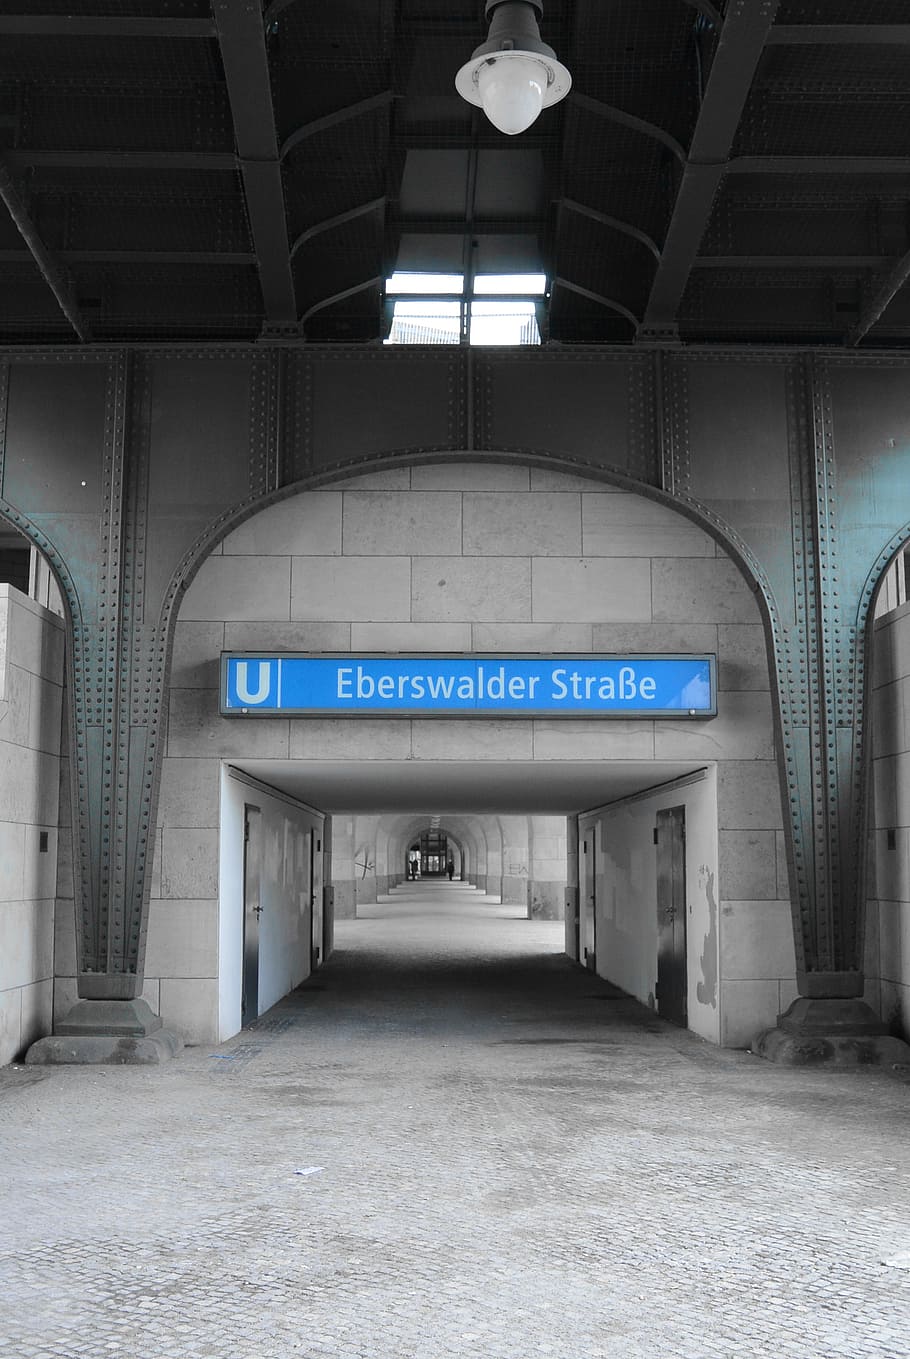 Berlin, Eberswalde, Ubahn, prenzlauerberg, urban, tunnel, passage, goal, architecture, transportation